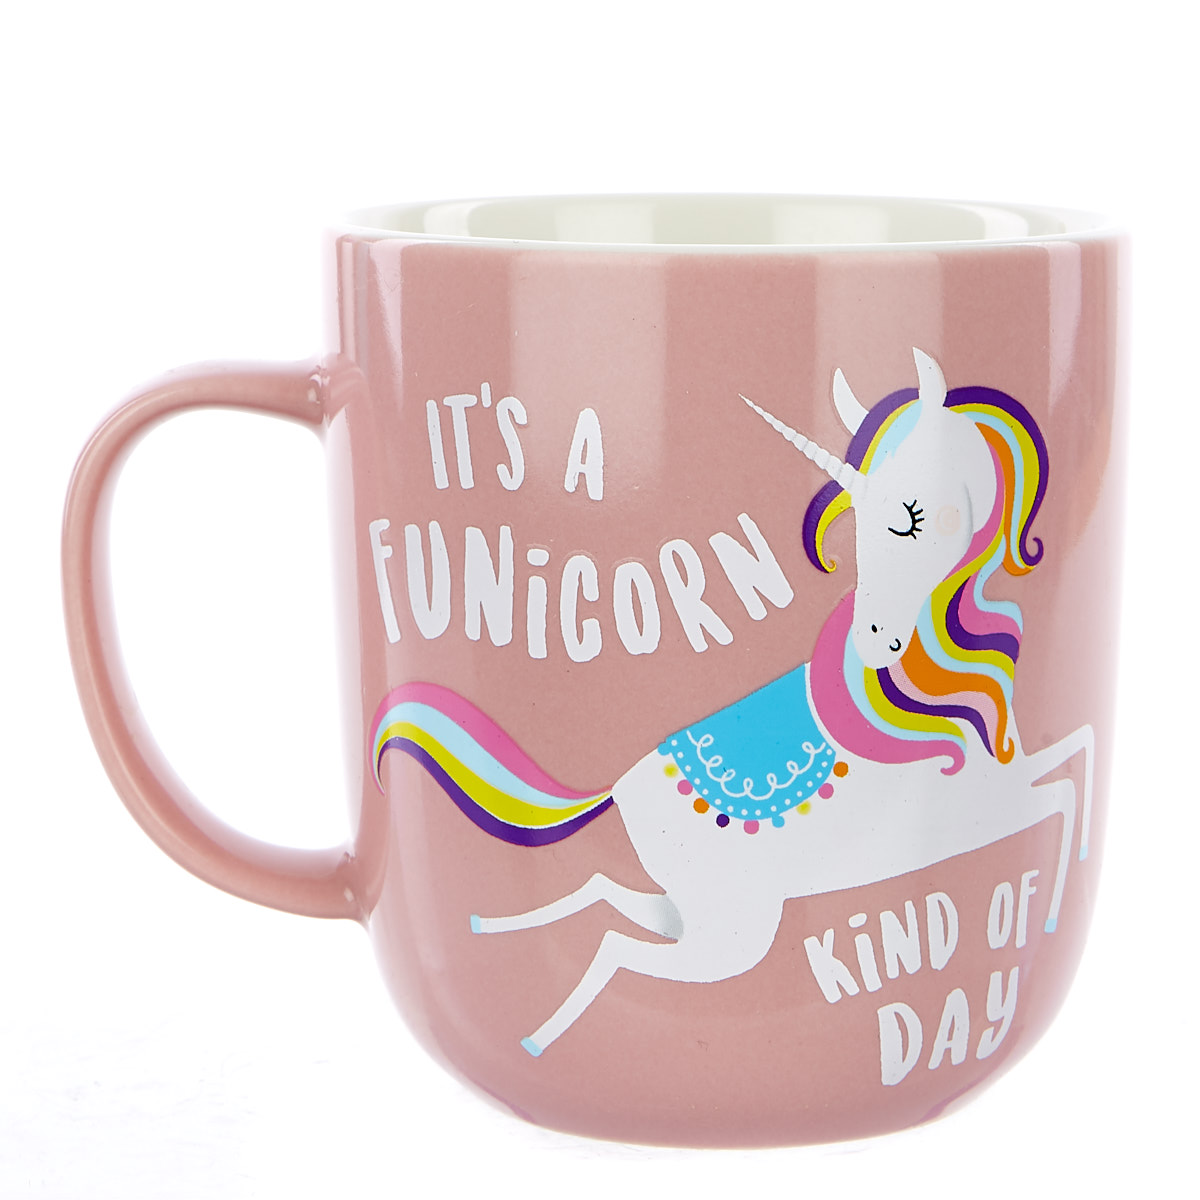 Funicorn Kind Of Day Mug